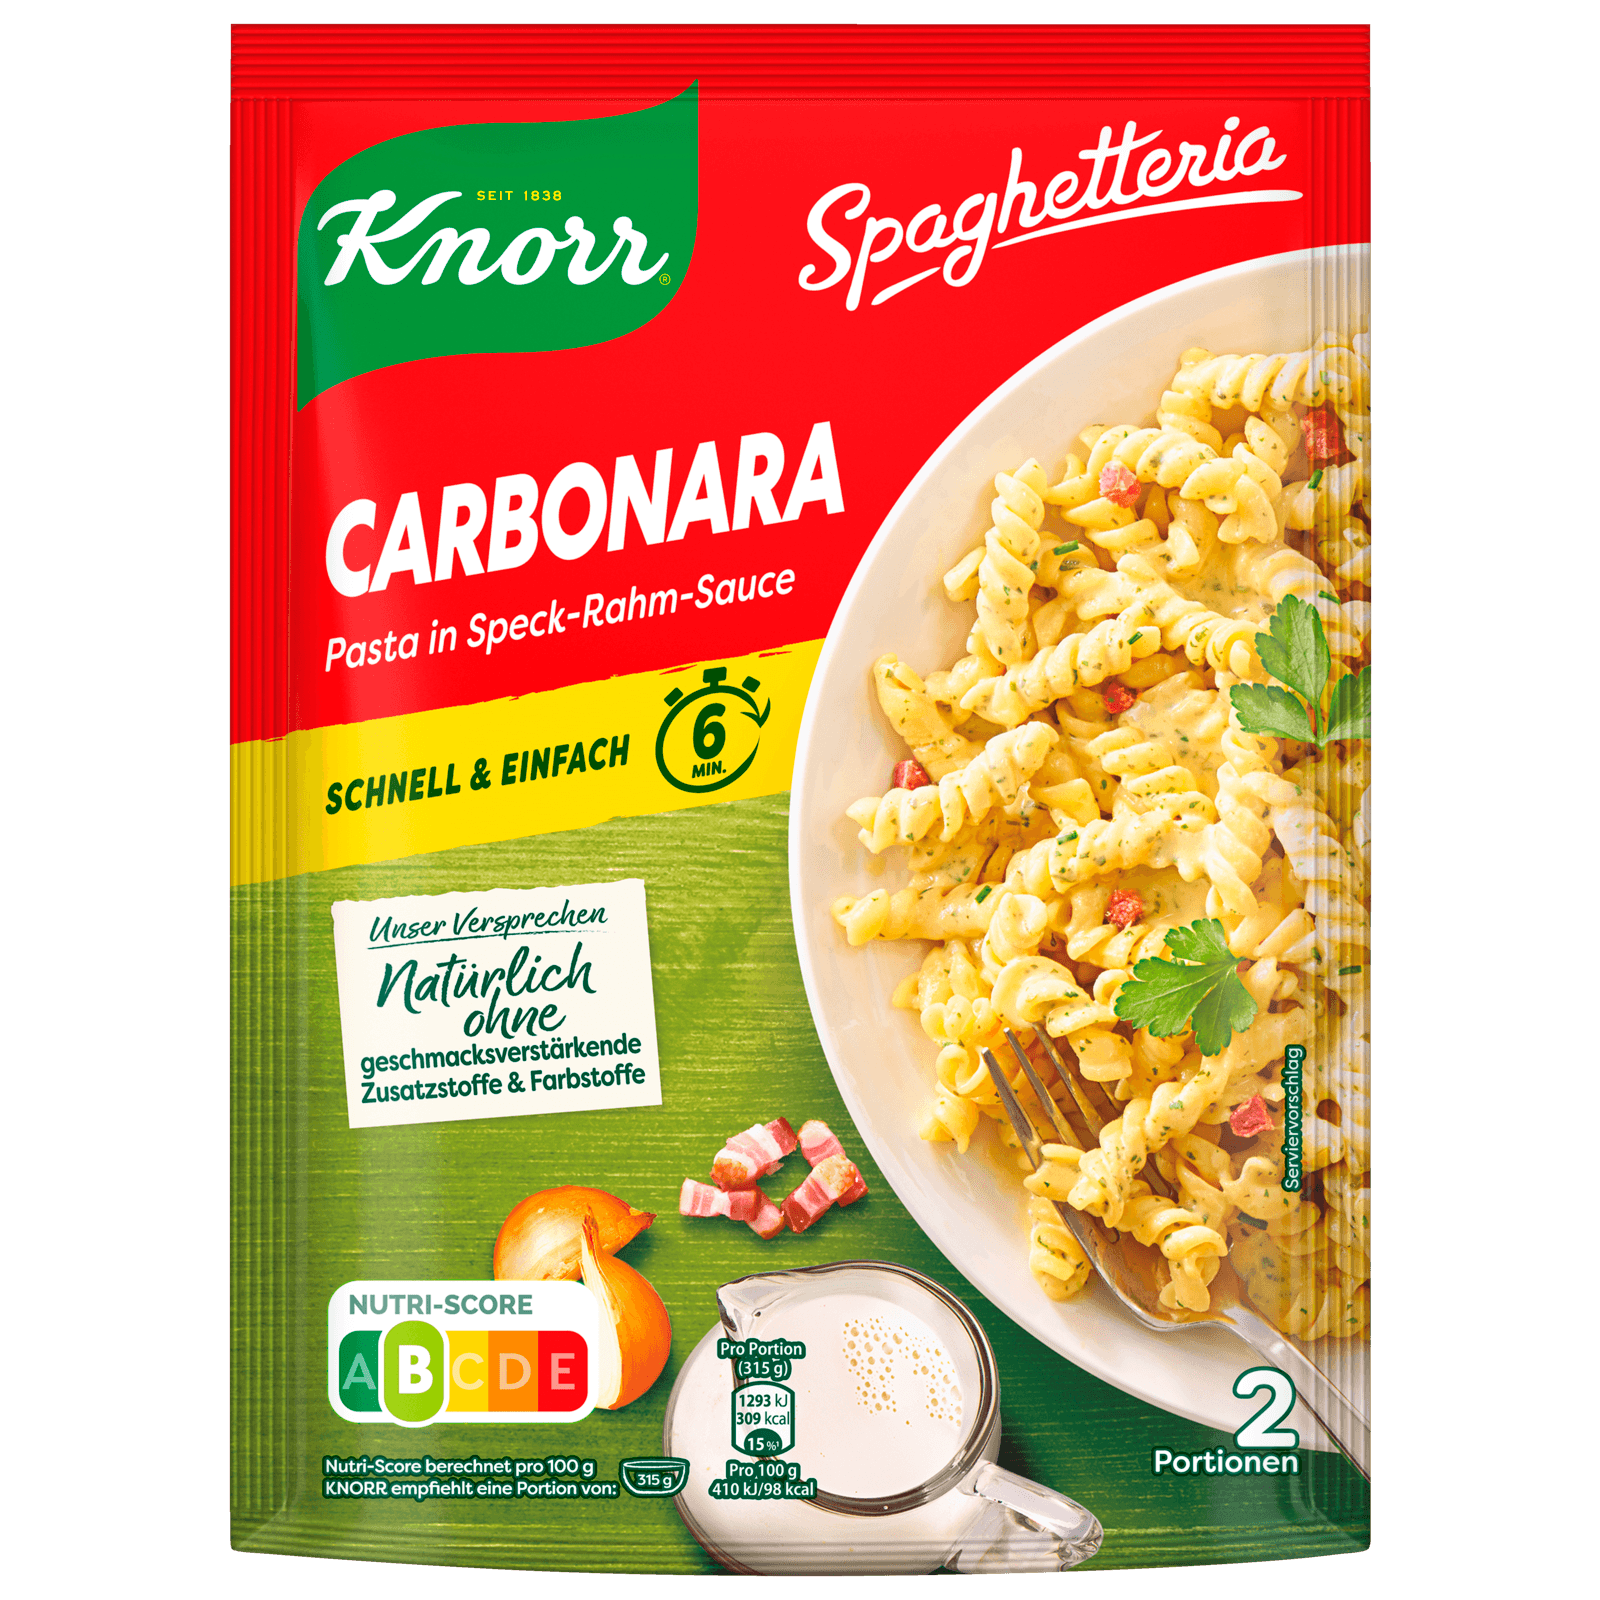 Knorr Carbonara 155g bei REWE online bestellen! 